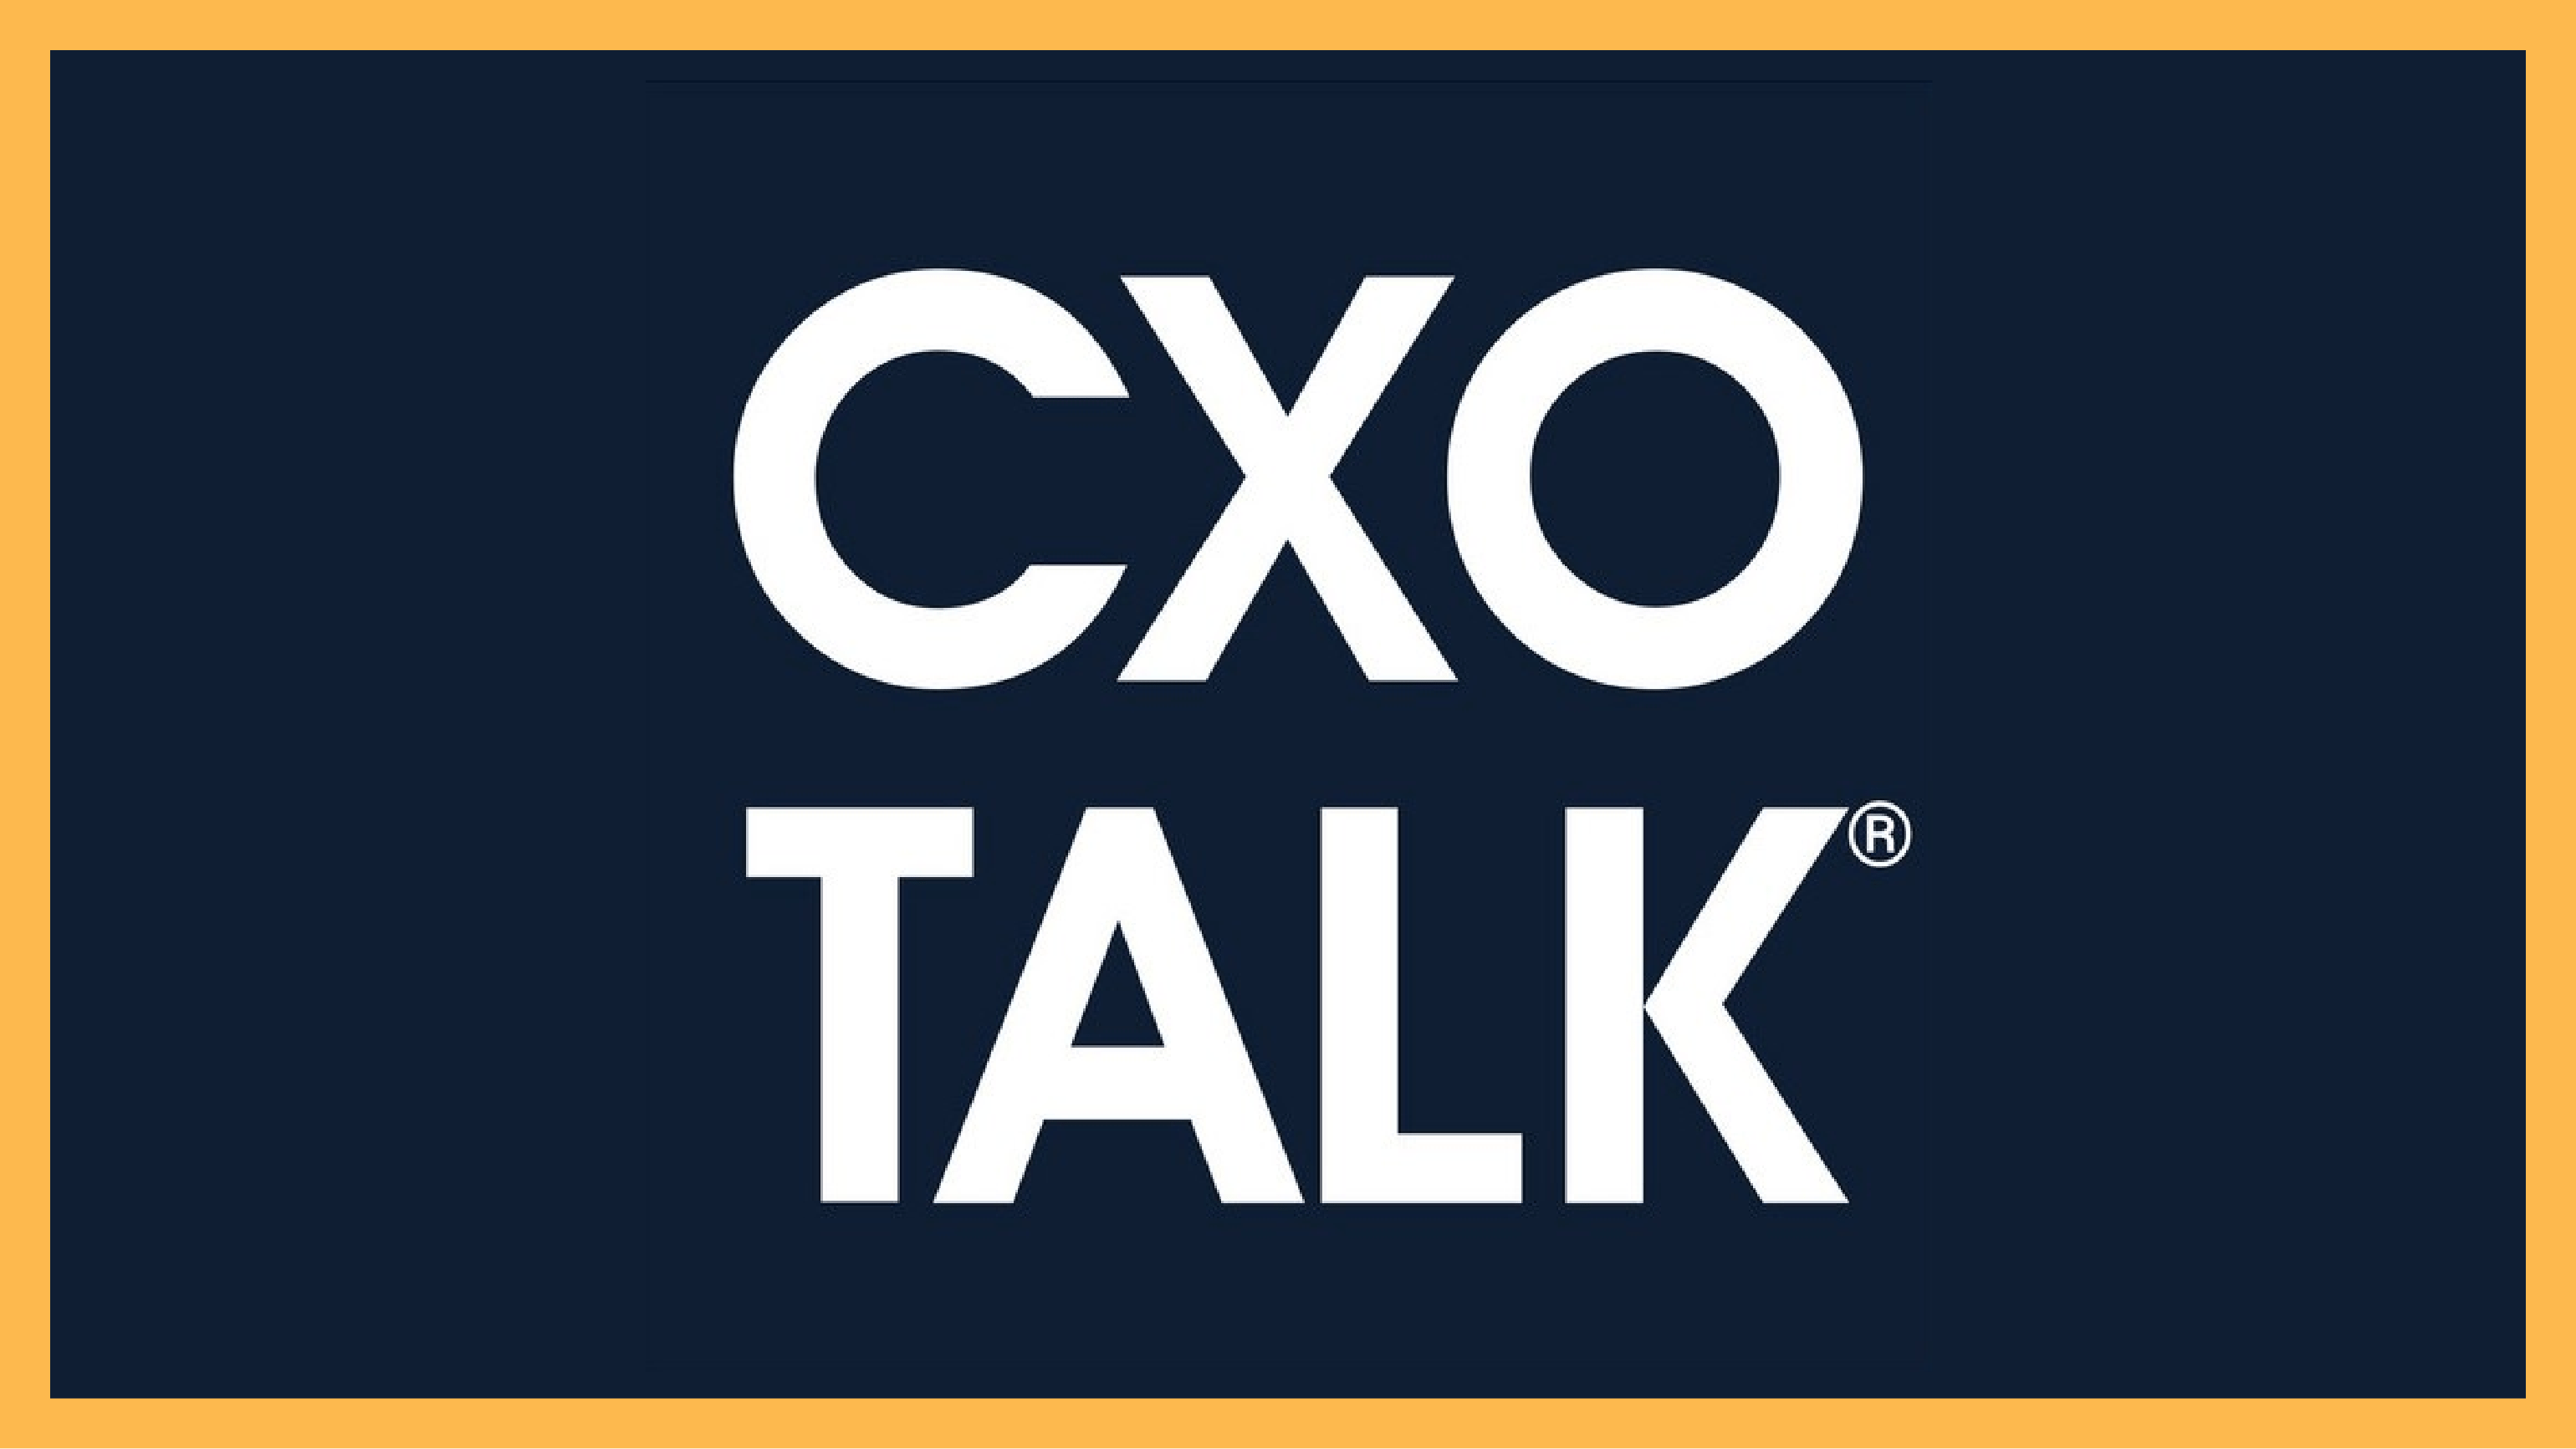 Cxo Talk podcast logo